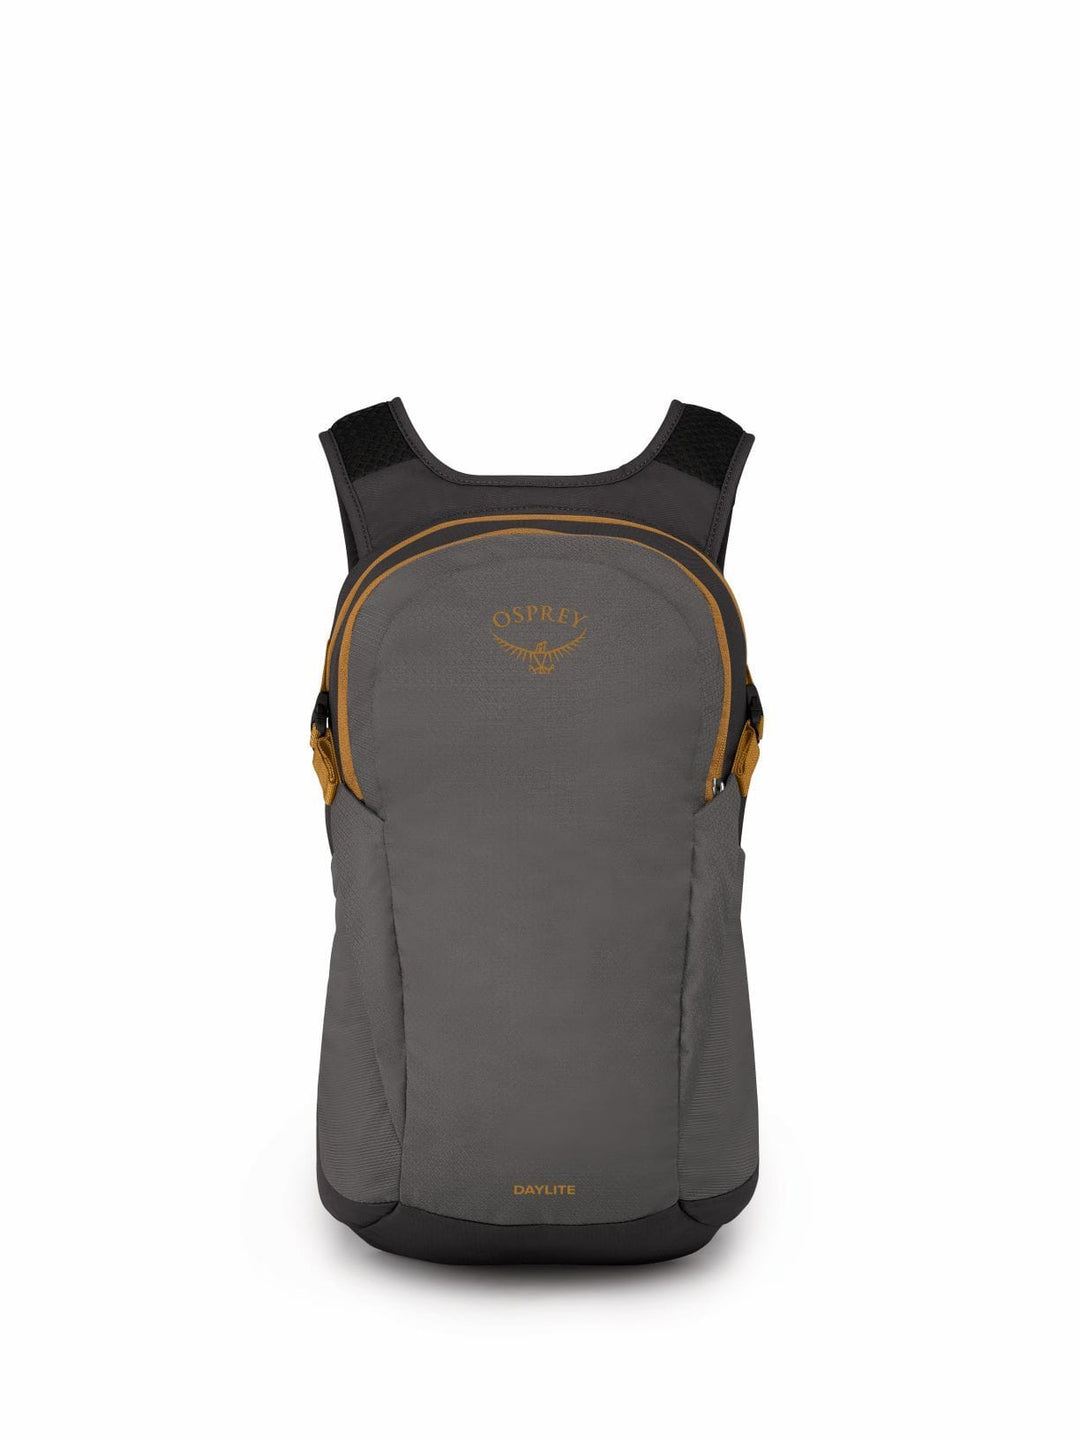 Daylite® Backpack, Osprey